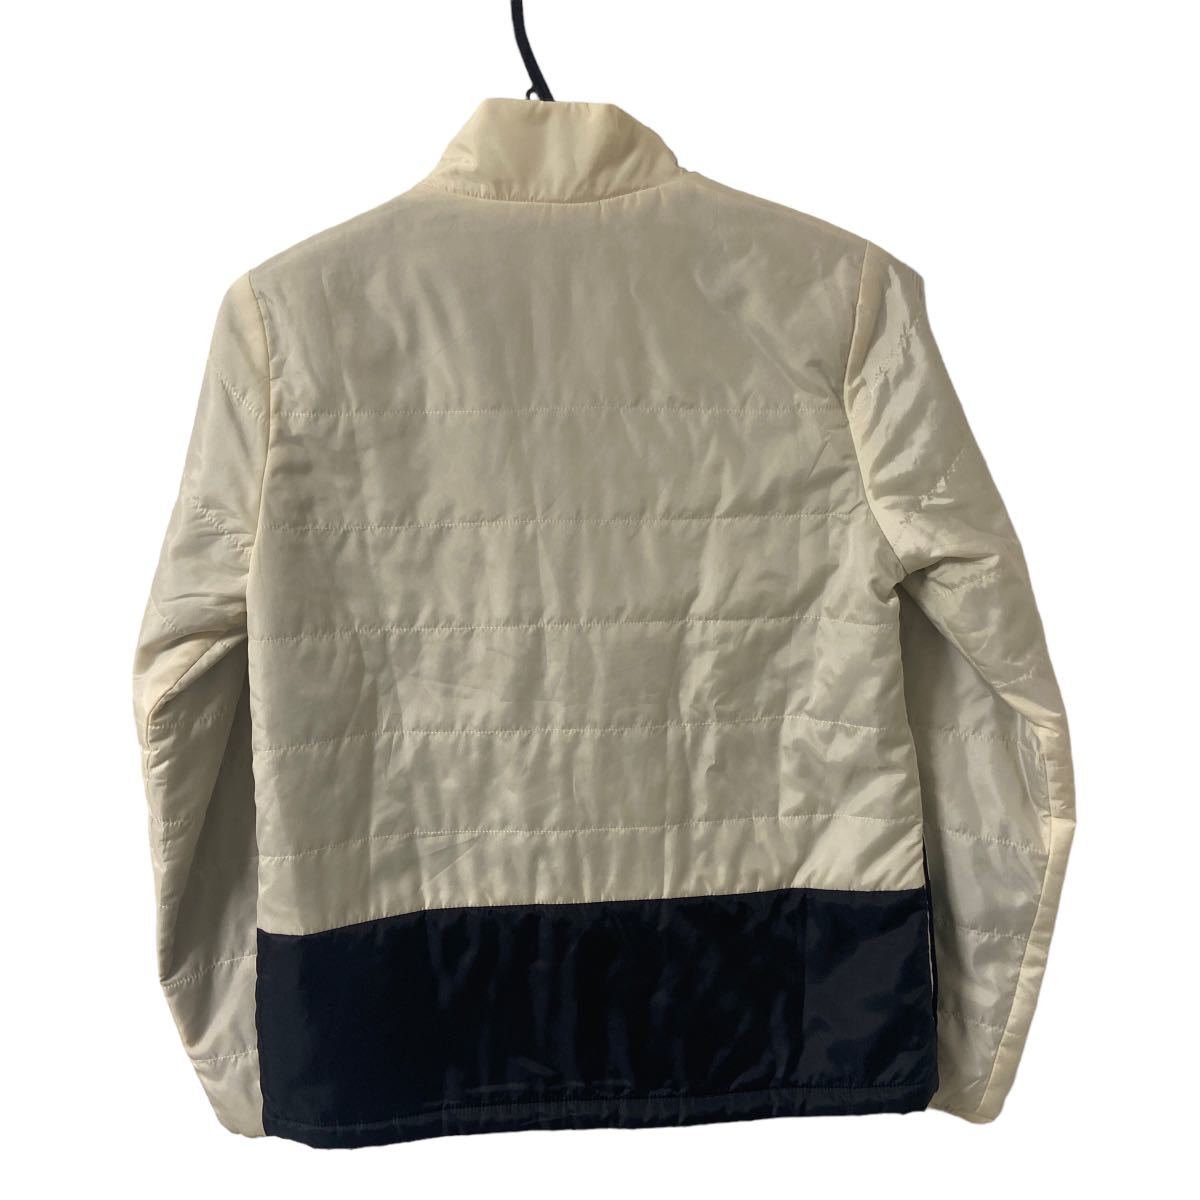 23 district Golf wear cotton inside blouson jacket 